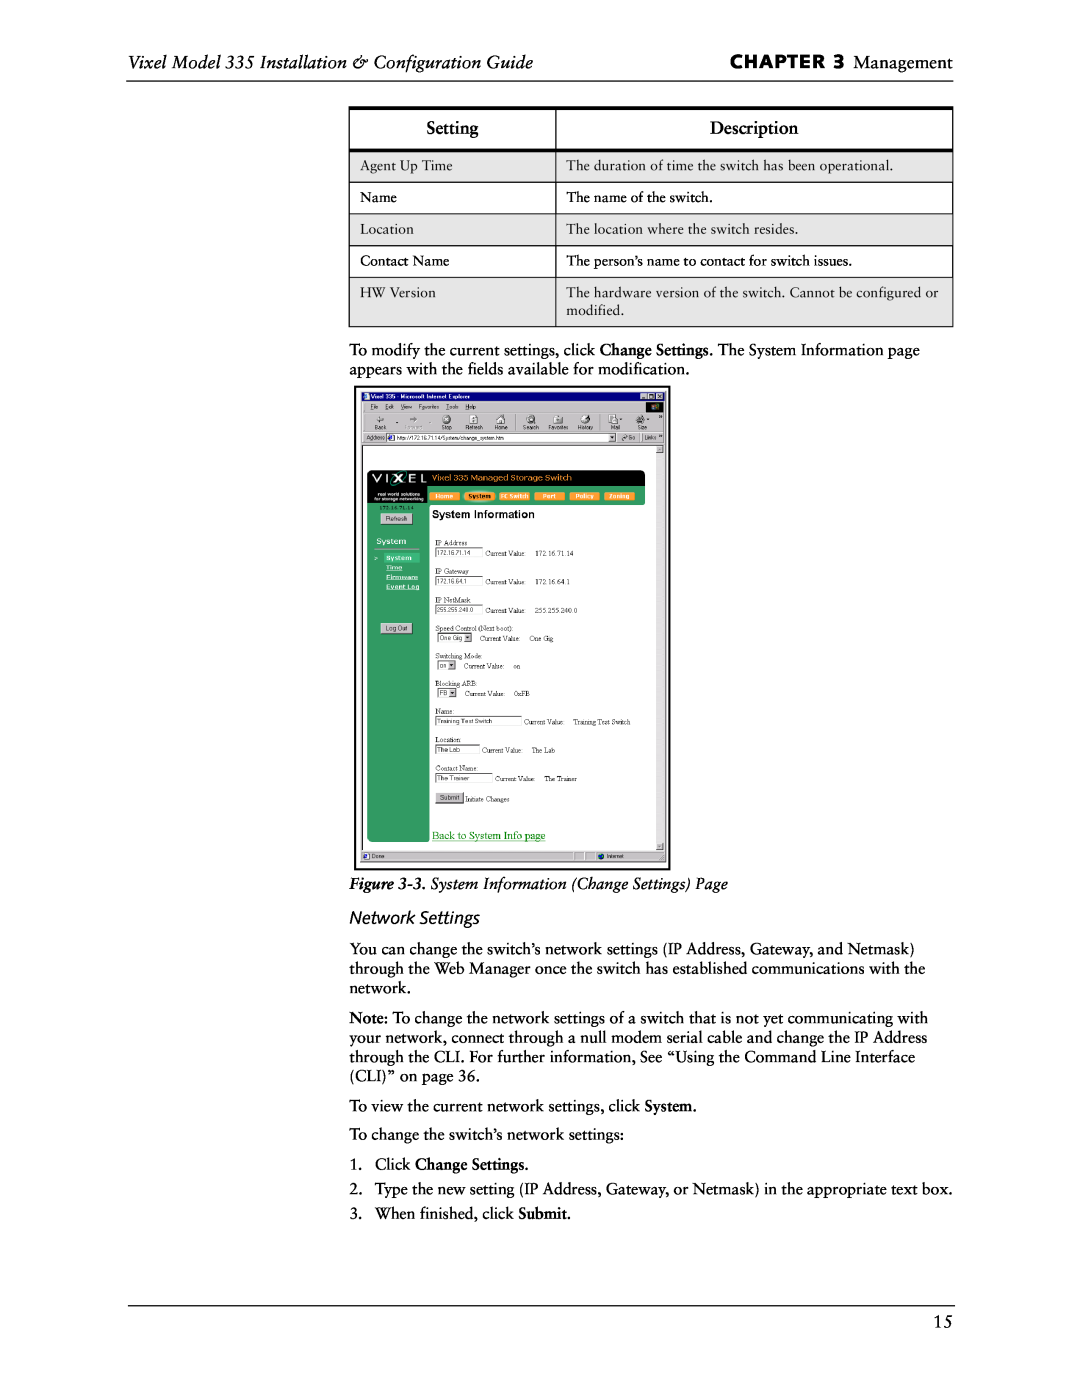 Vixel manual Management, Vixel Model 335 Installation & Configuration Guide, Description, Network Settings 